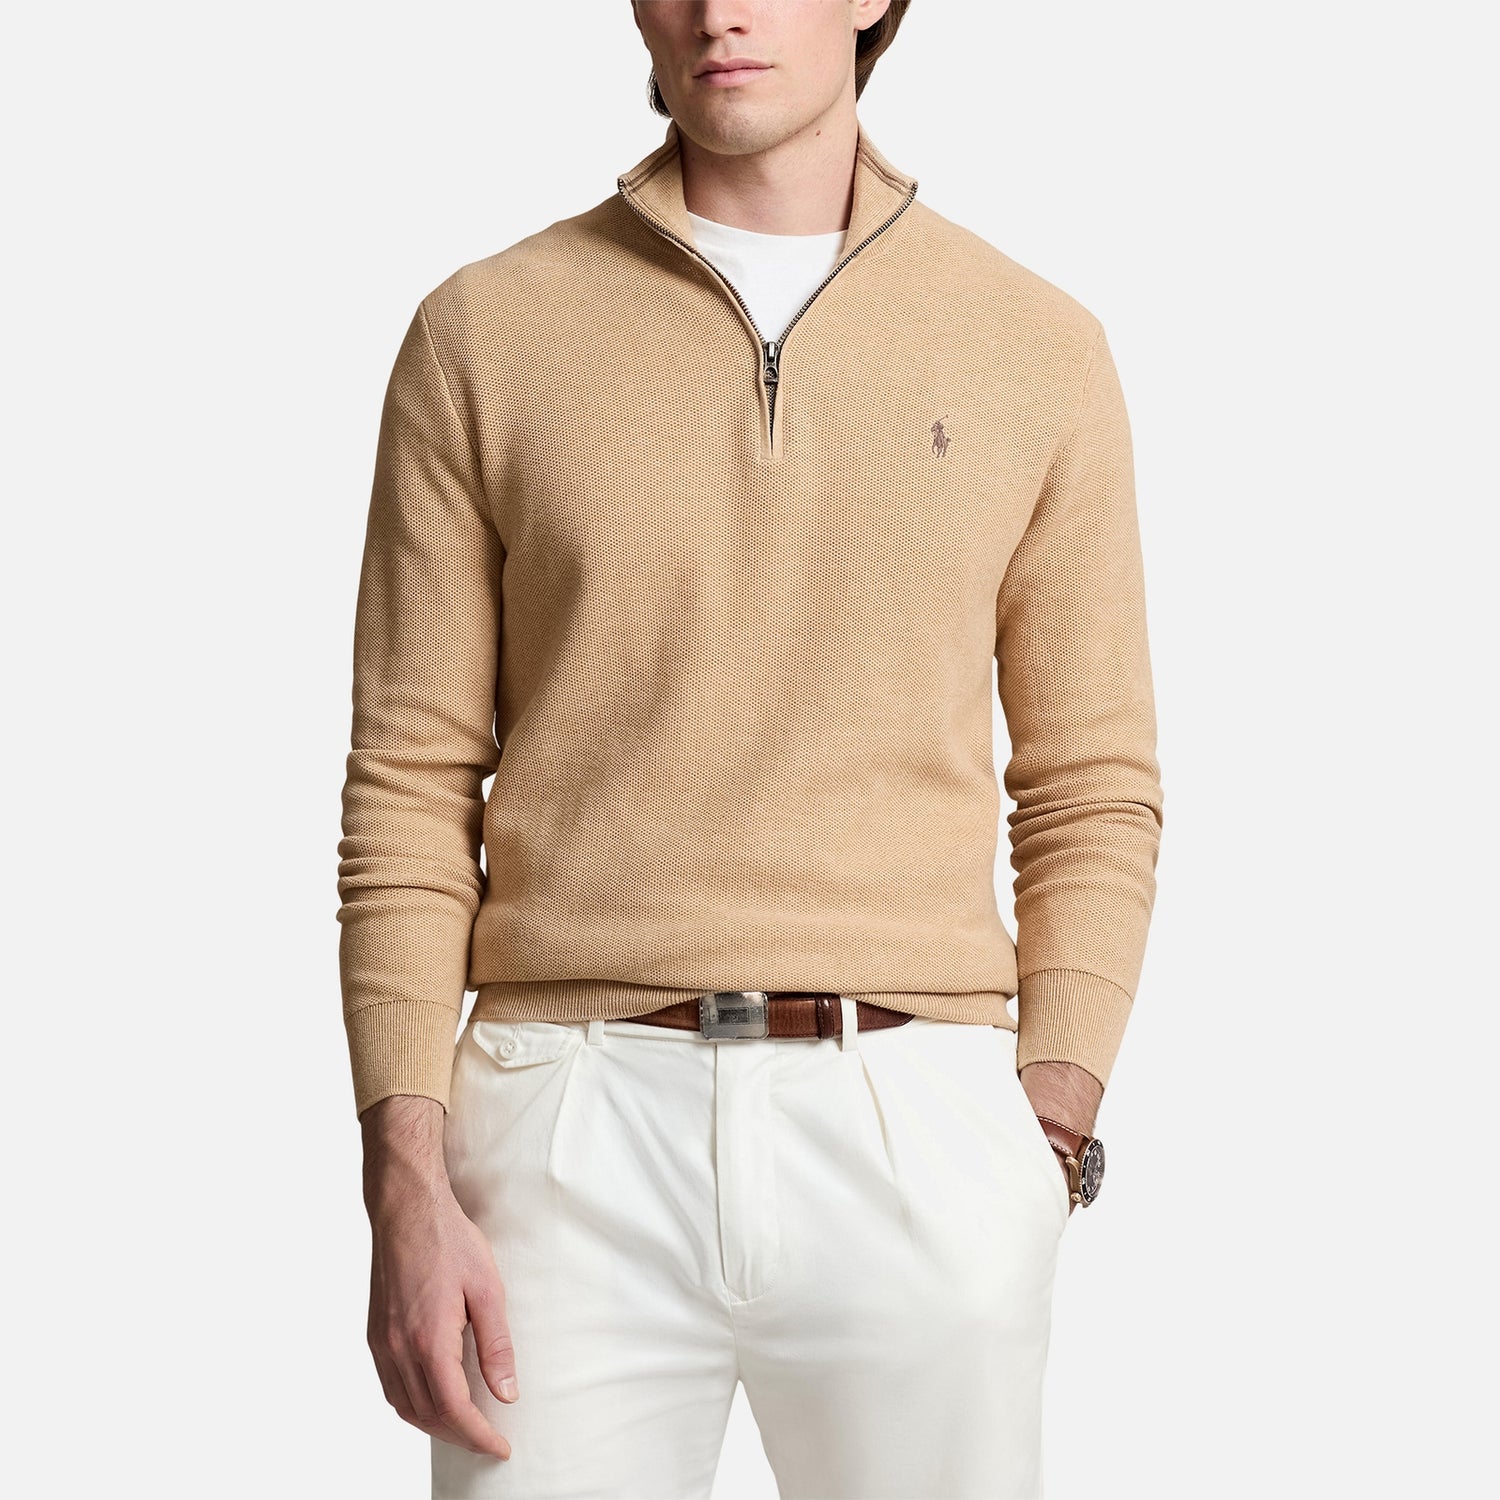 Polo Ralph Lauren Double Knit Sweatshirt - XL